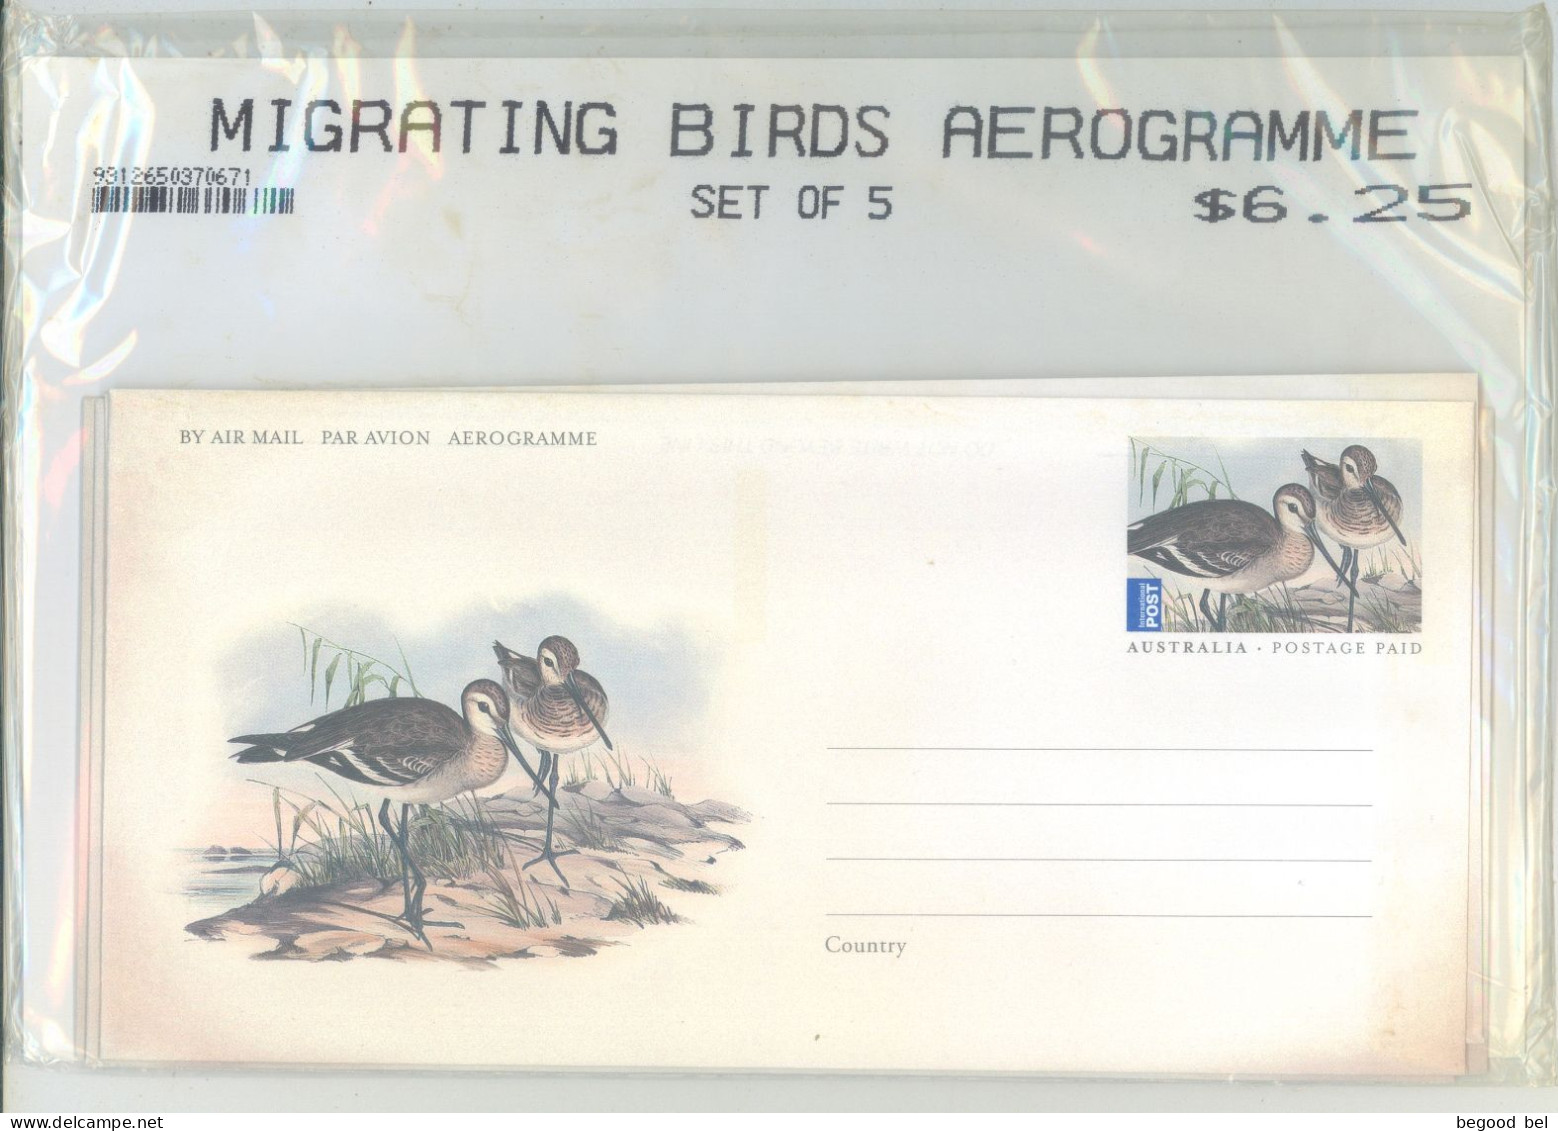 AUSTRALIA - AEROGRAMME COMPLETE SET OF 5 IN THE ORIGINAL ENCLOSED PACKAGING - 2009 - MIGRATING BIRDS -  Lot 25752 - Aerograms